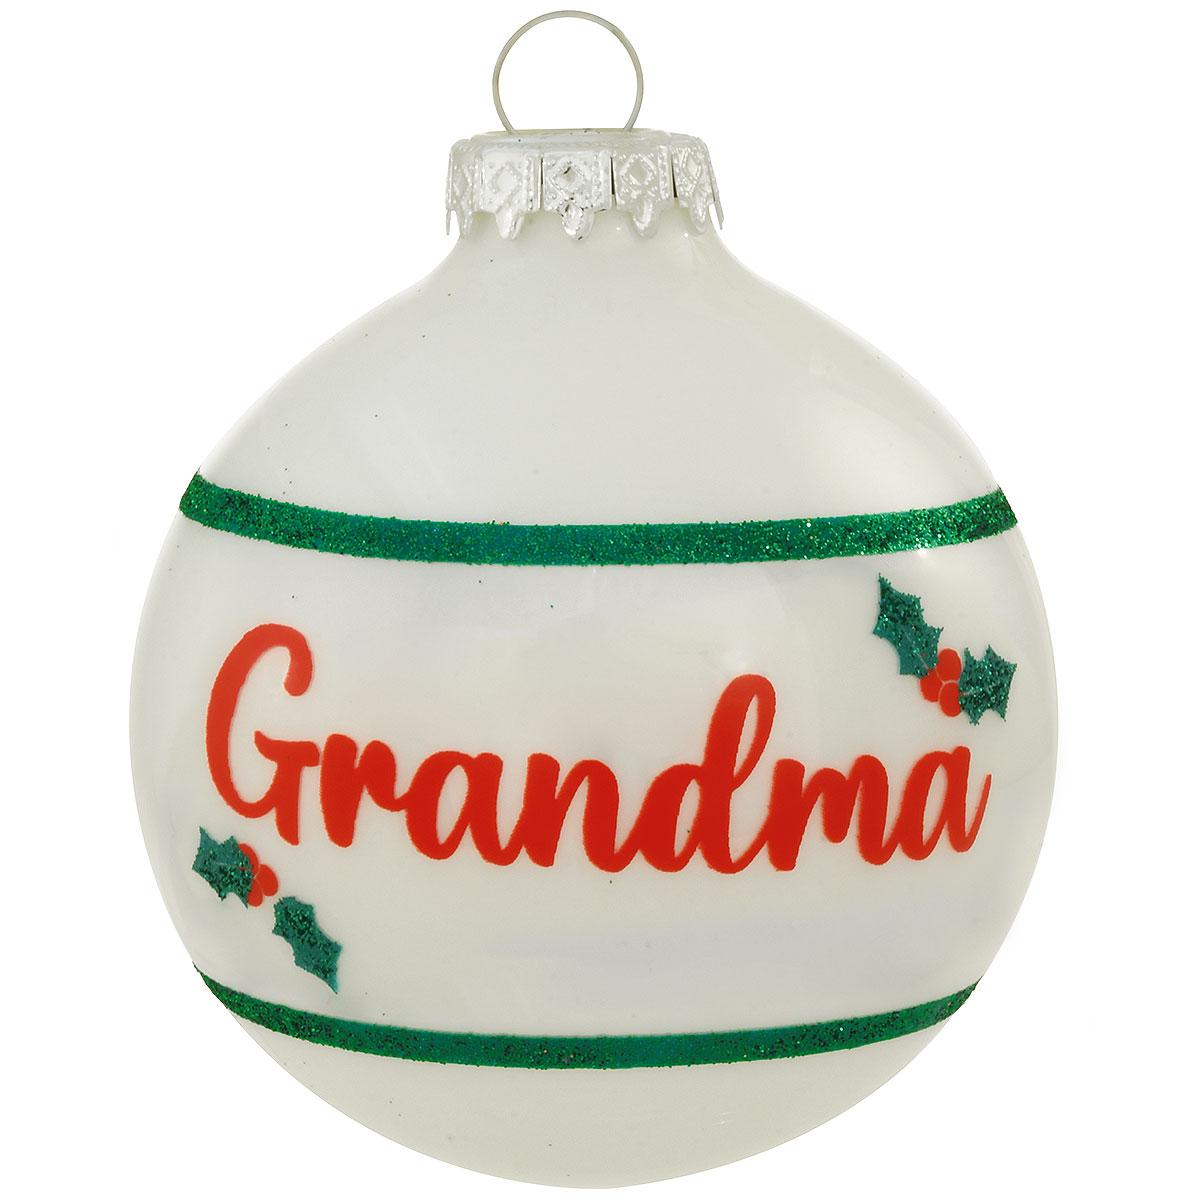 Grandma Glass Ornament